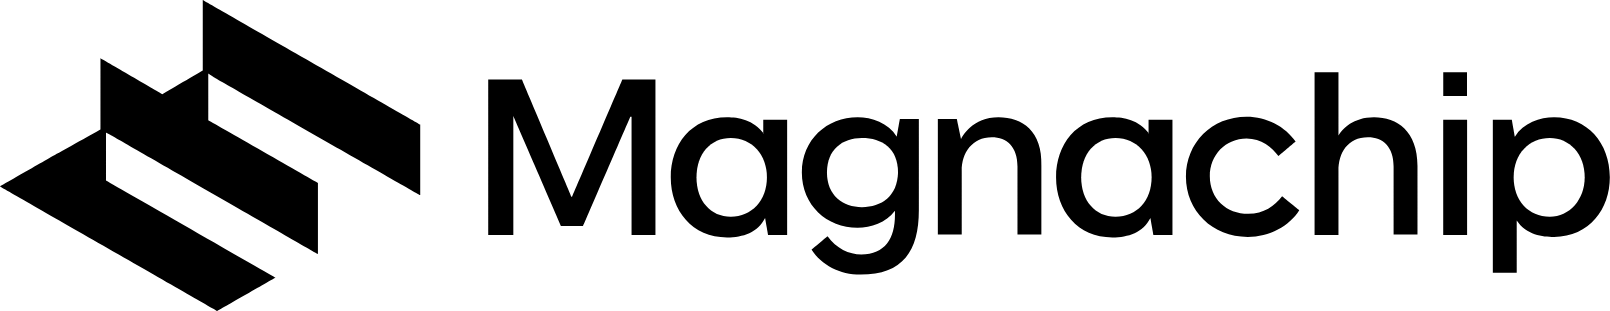 Magnachip logo large (transparent PNG)